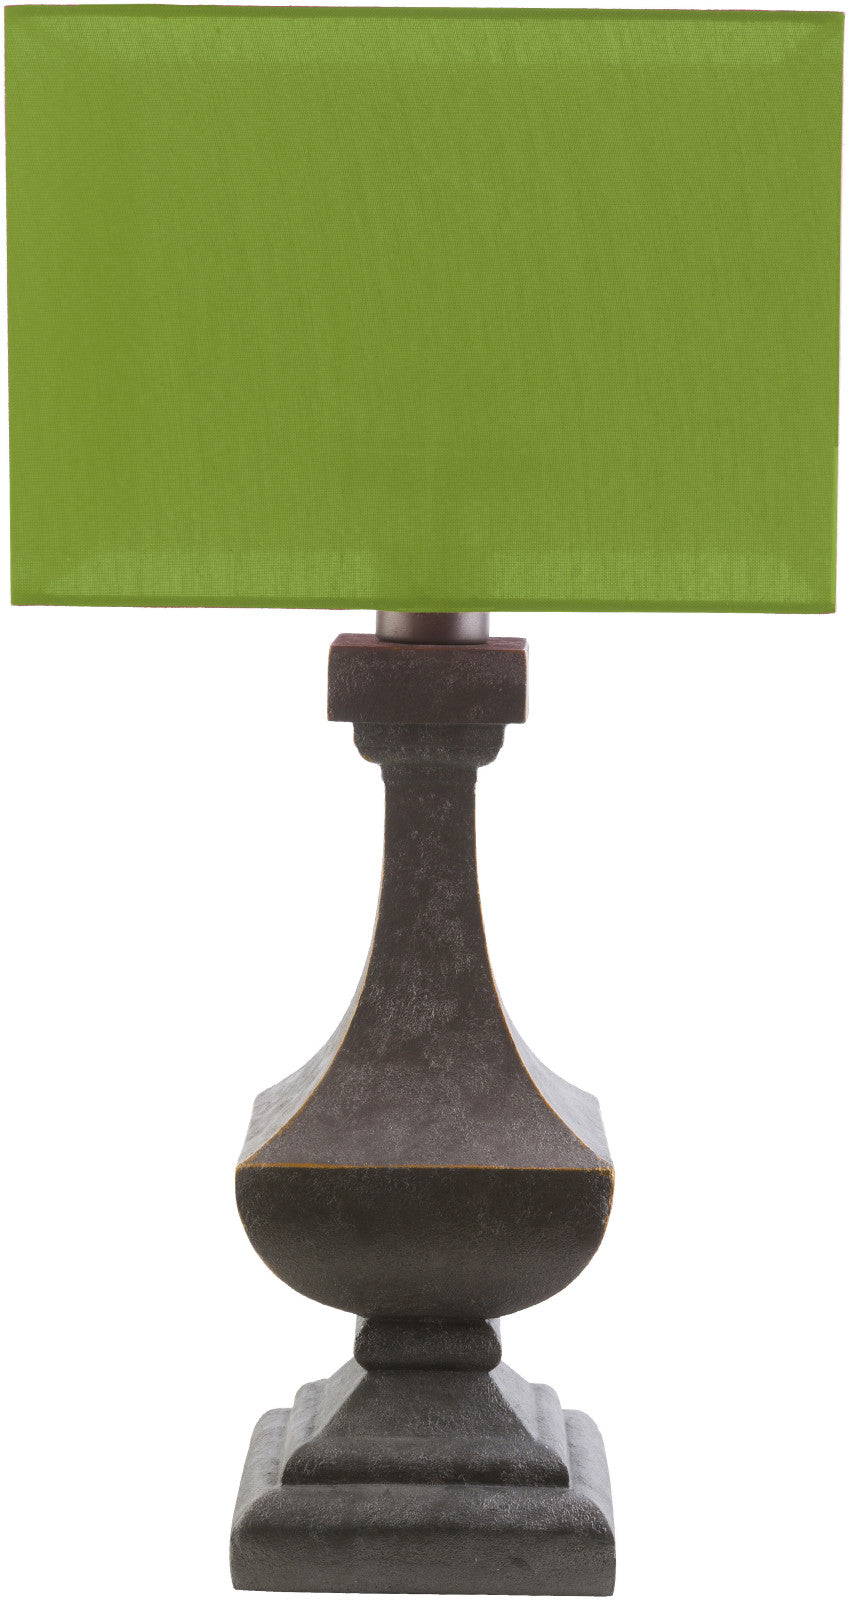 Surya Davis DAV-486 Green Lamp Table Lamp